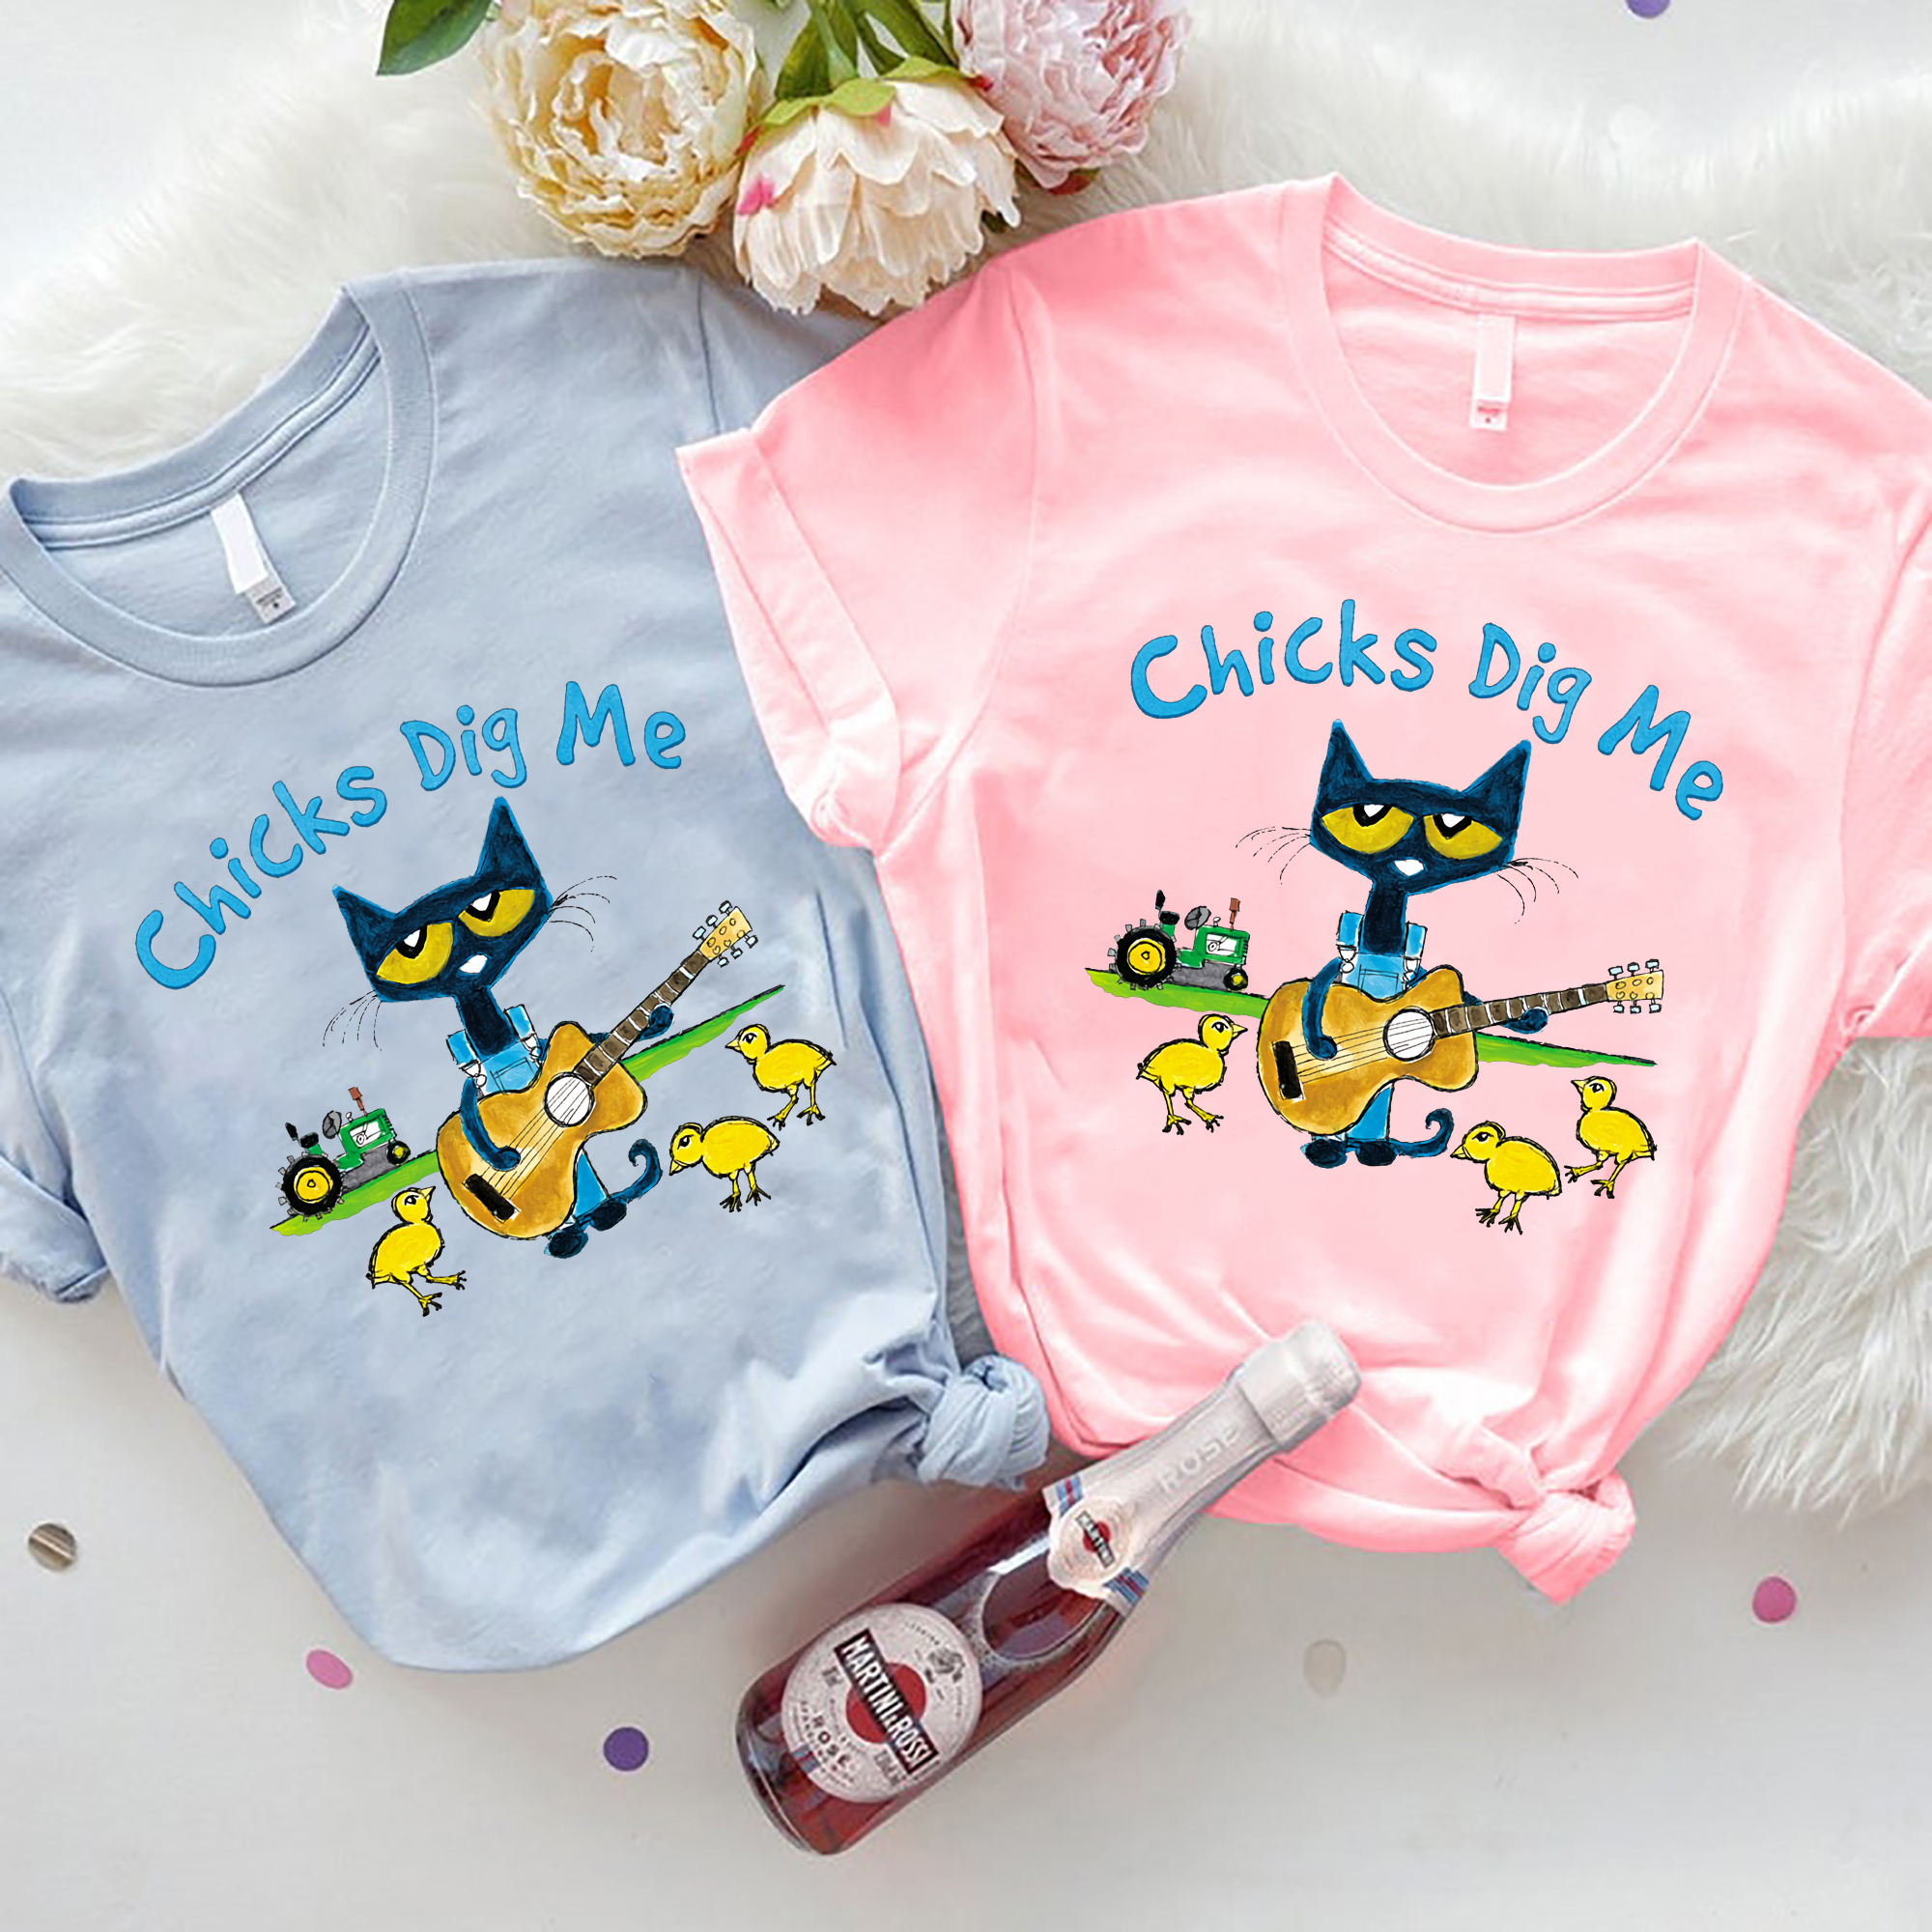 Pete The Cat Shirt, Blue Cat Chicks Dig Me Shirt, Pete The Cat Groovy Matching Shirt, Pete The Cat Inspired Birthday Shirt